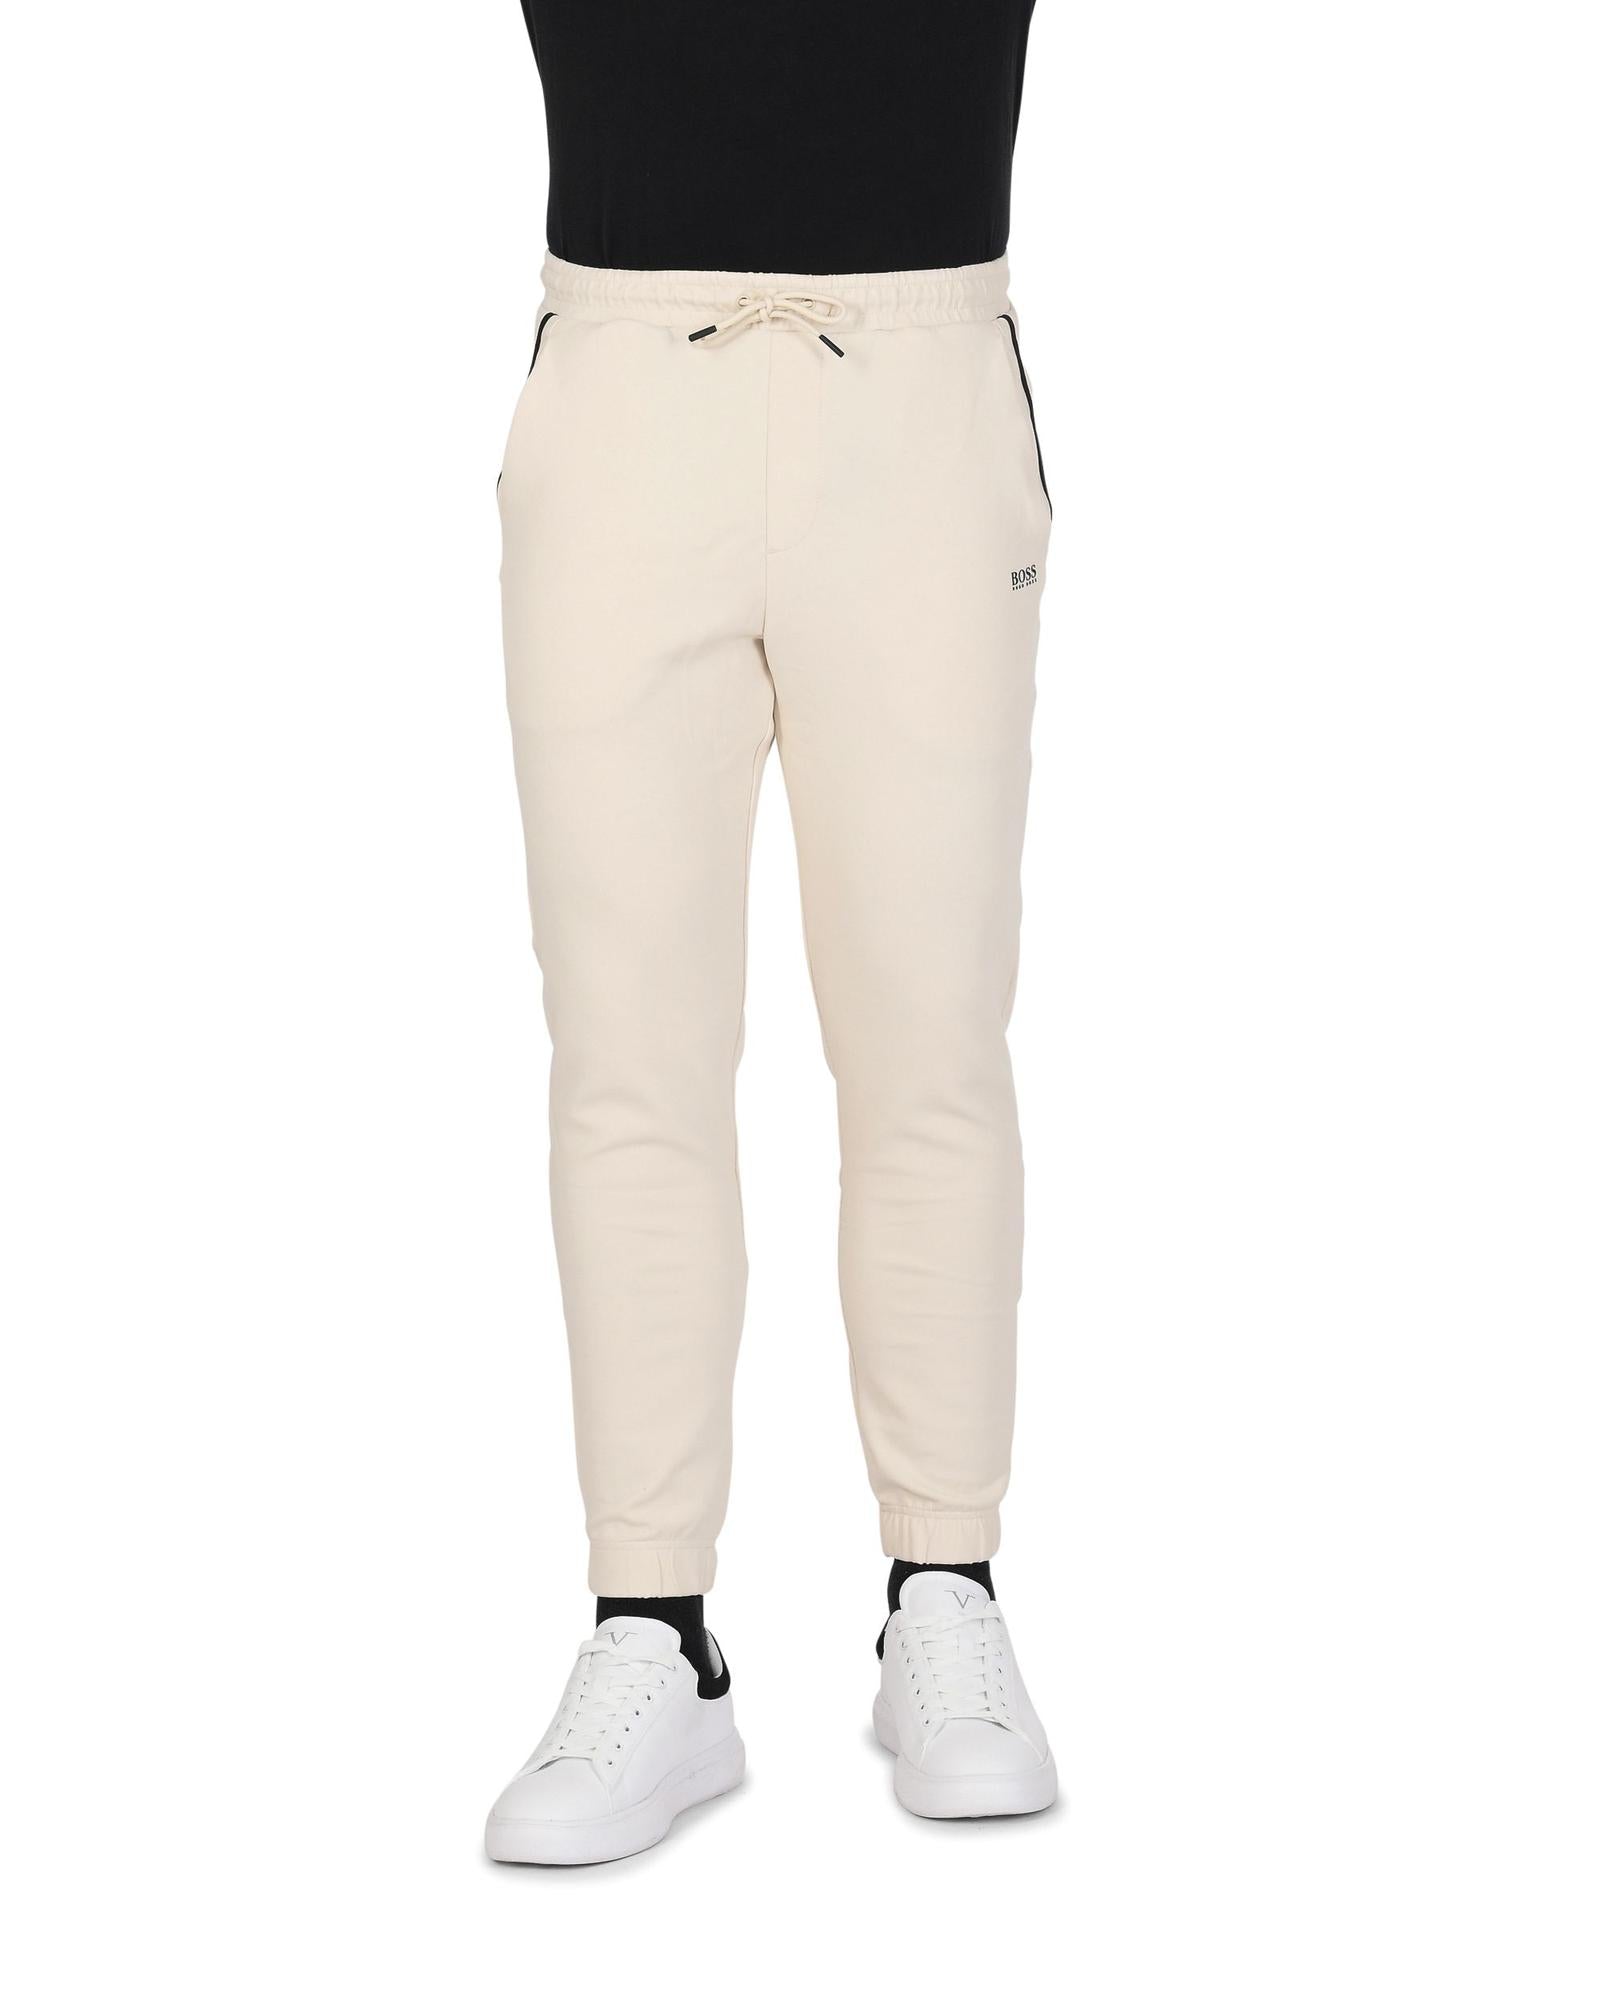 Men's Cotton Blend White Pants for Men in White - 2XL